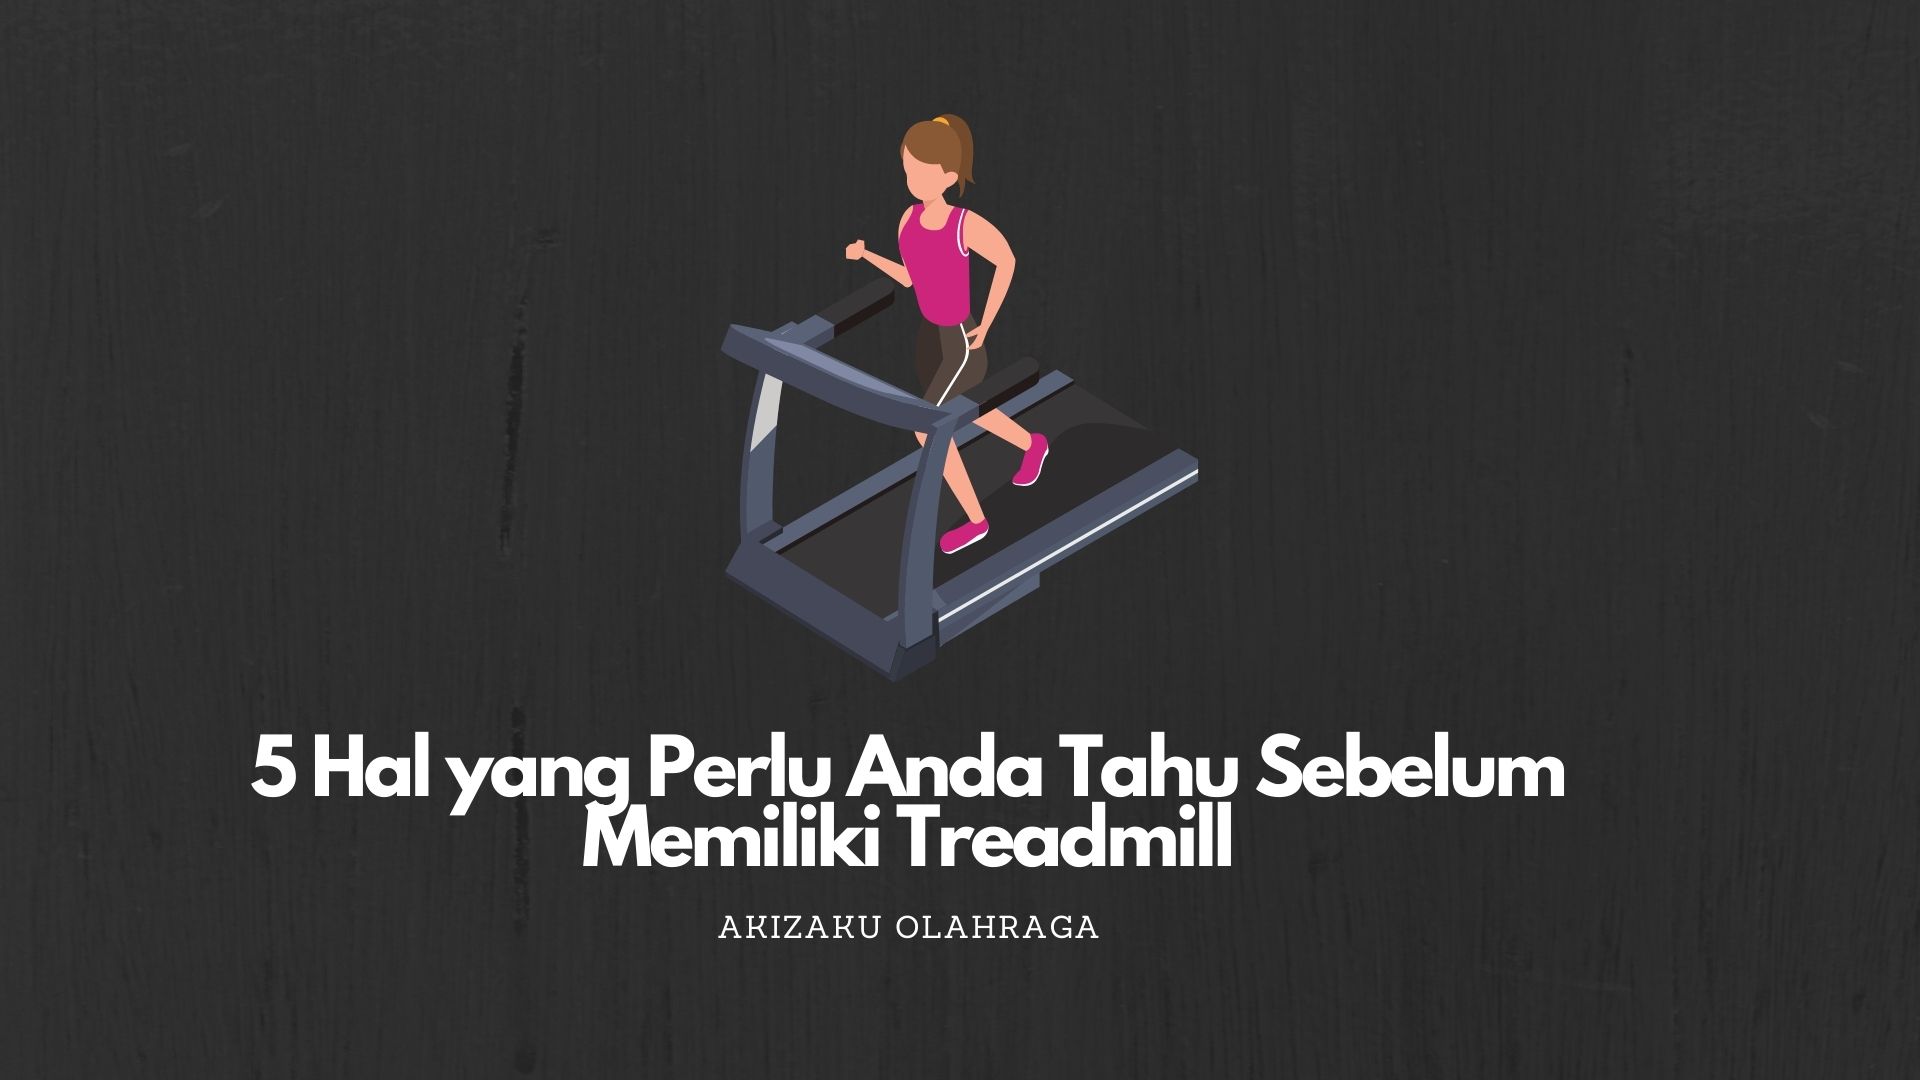 5 Hal yang Perlu Anda Tahu Sebelum Memiliki Treadmill